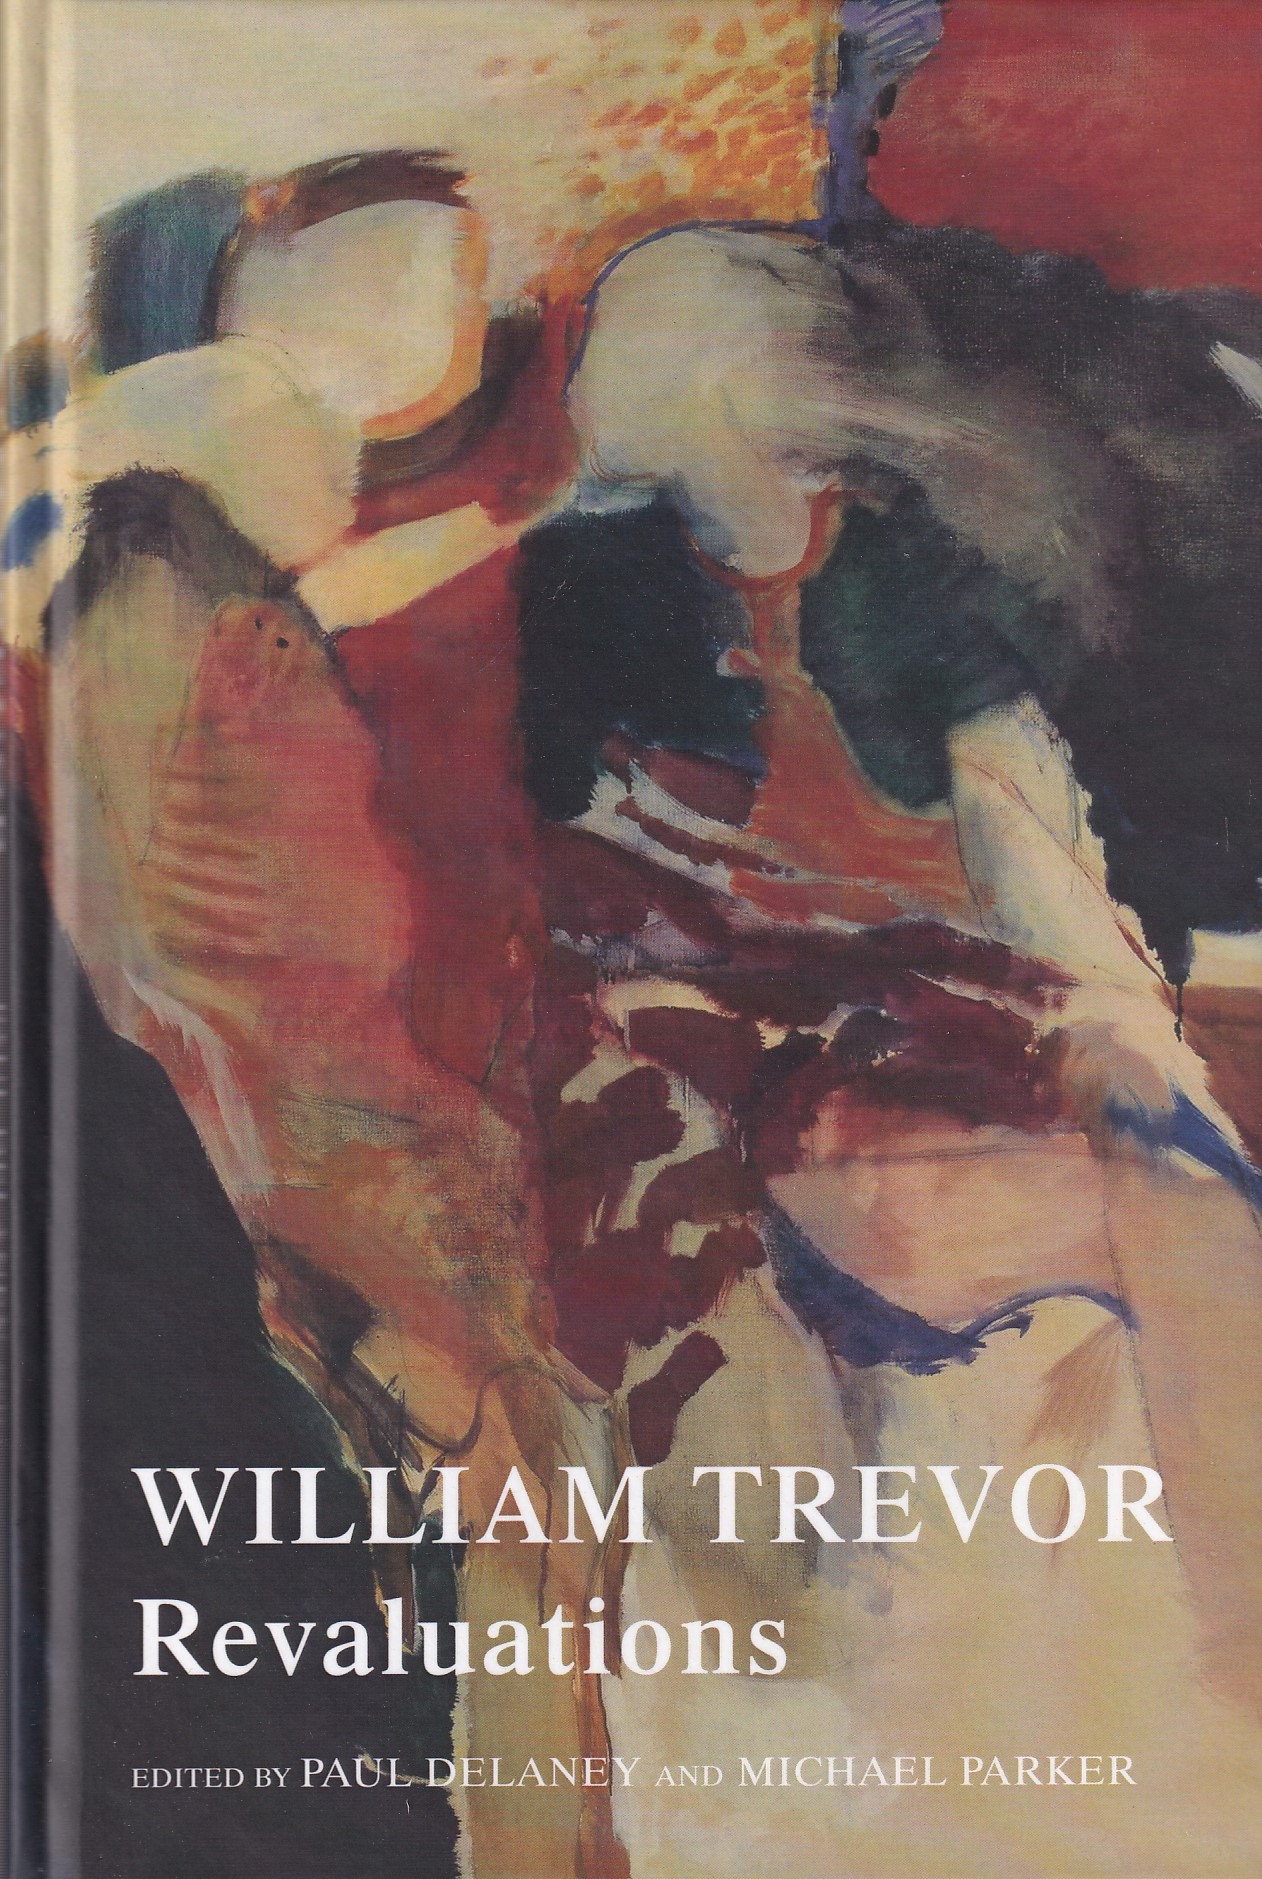 William Trevor Revaluations | Paul Delaney and Michael Parker | Charlie Byrne's